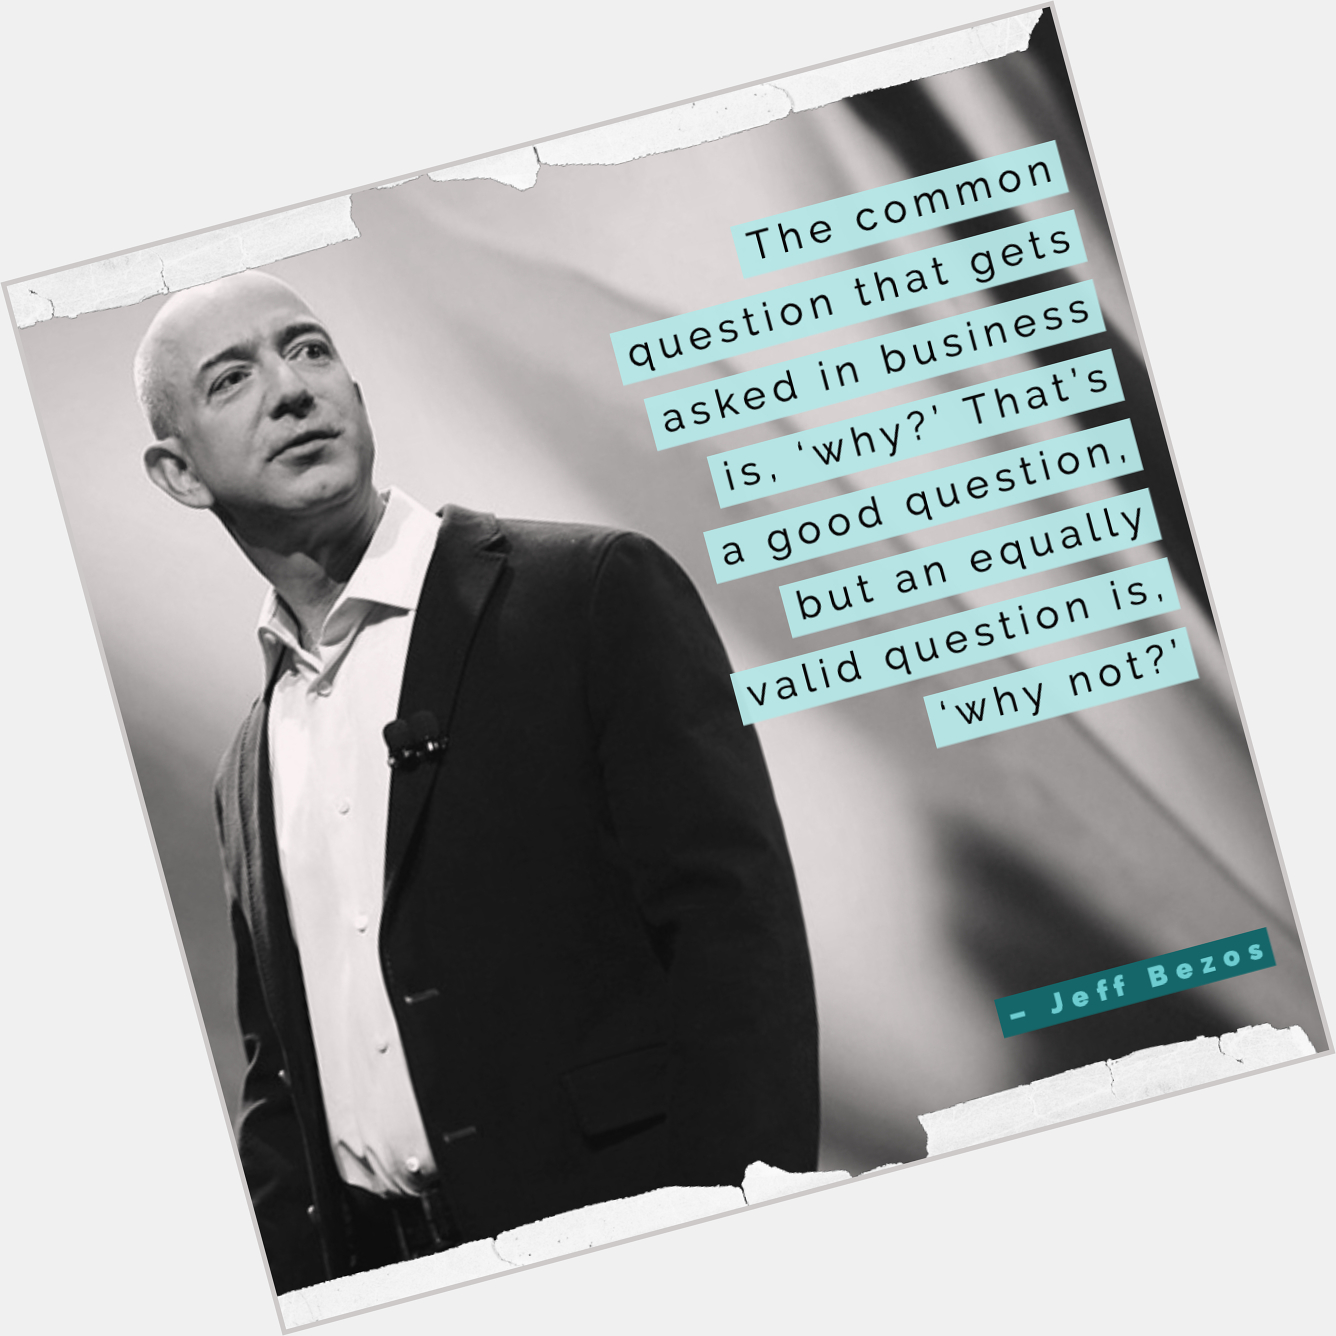 Happy Birthday to Jeff Bezos, Amazon founder. 